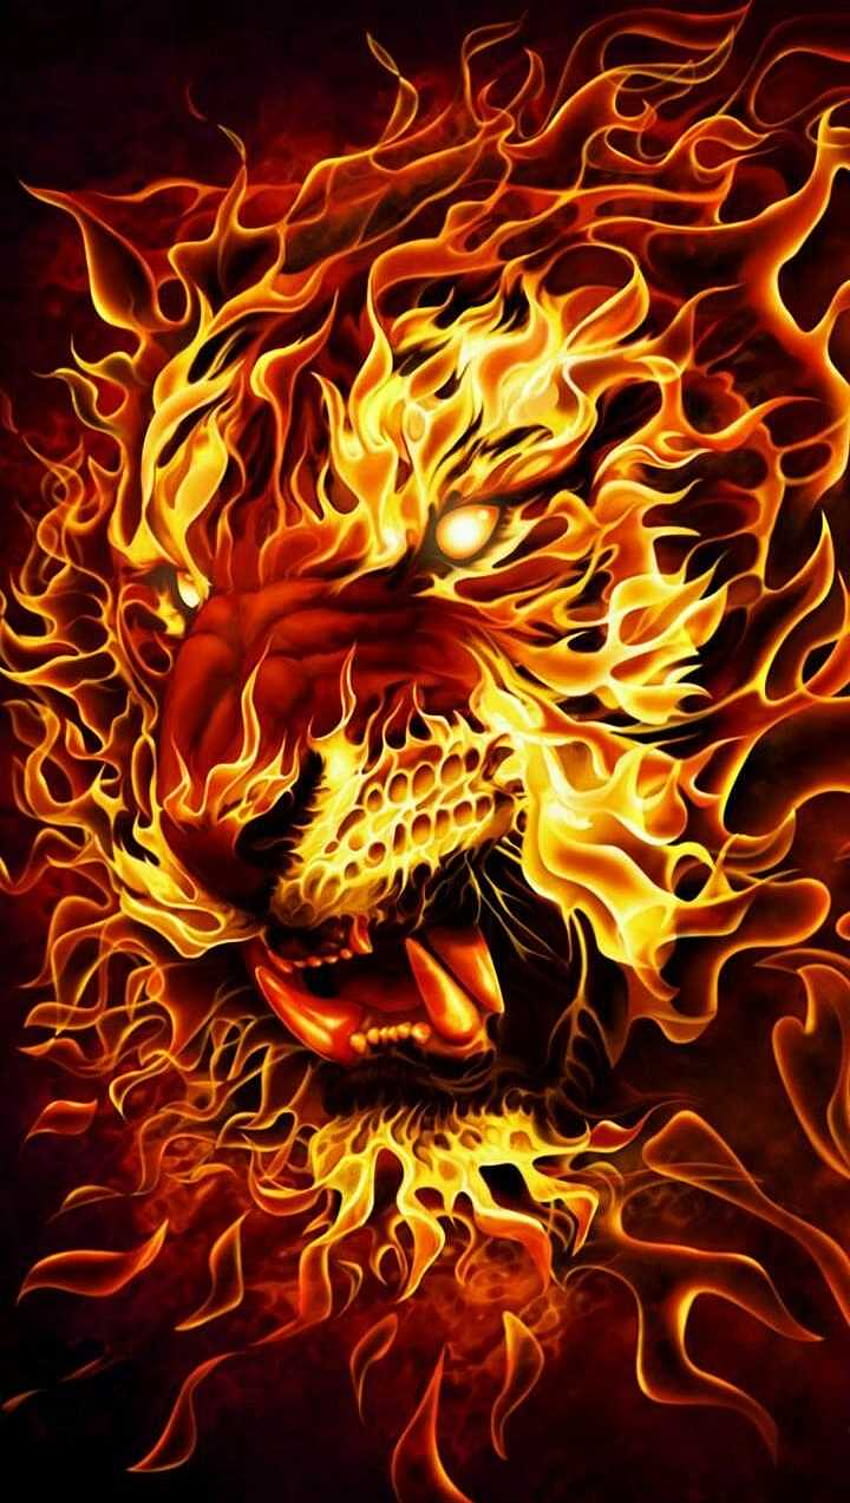 Pertunjukan listrik hantu suci : Singa api, ponsel singa yang menyala wallpaper ponsel HD